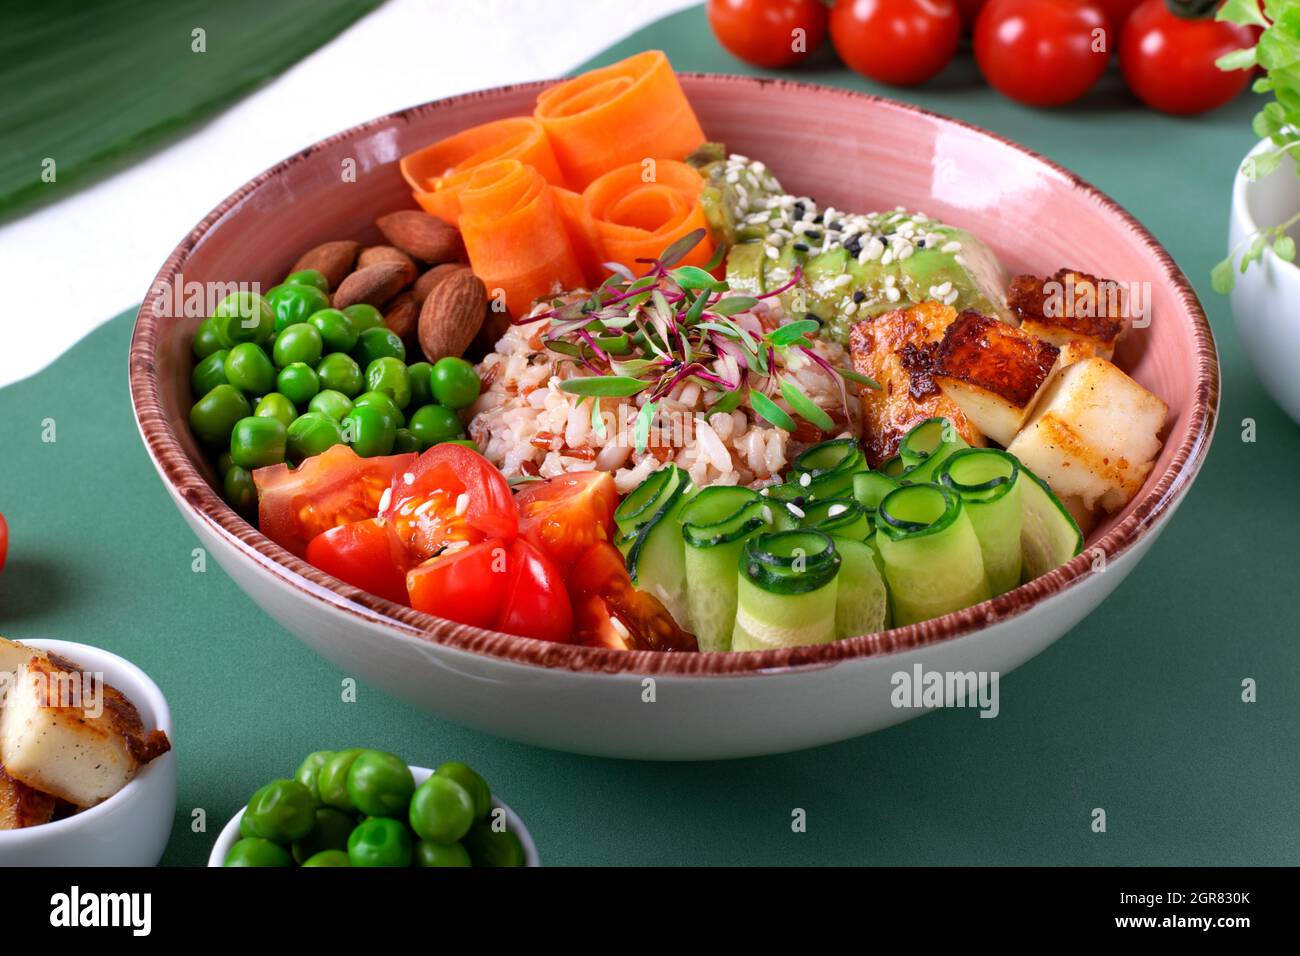 Vegan Poke Bowl With Fried Tofu, Tomato, Carrot, Avocado, Rice, Cucumber, Green Pea And Almond Stock Photo